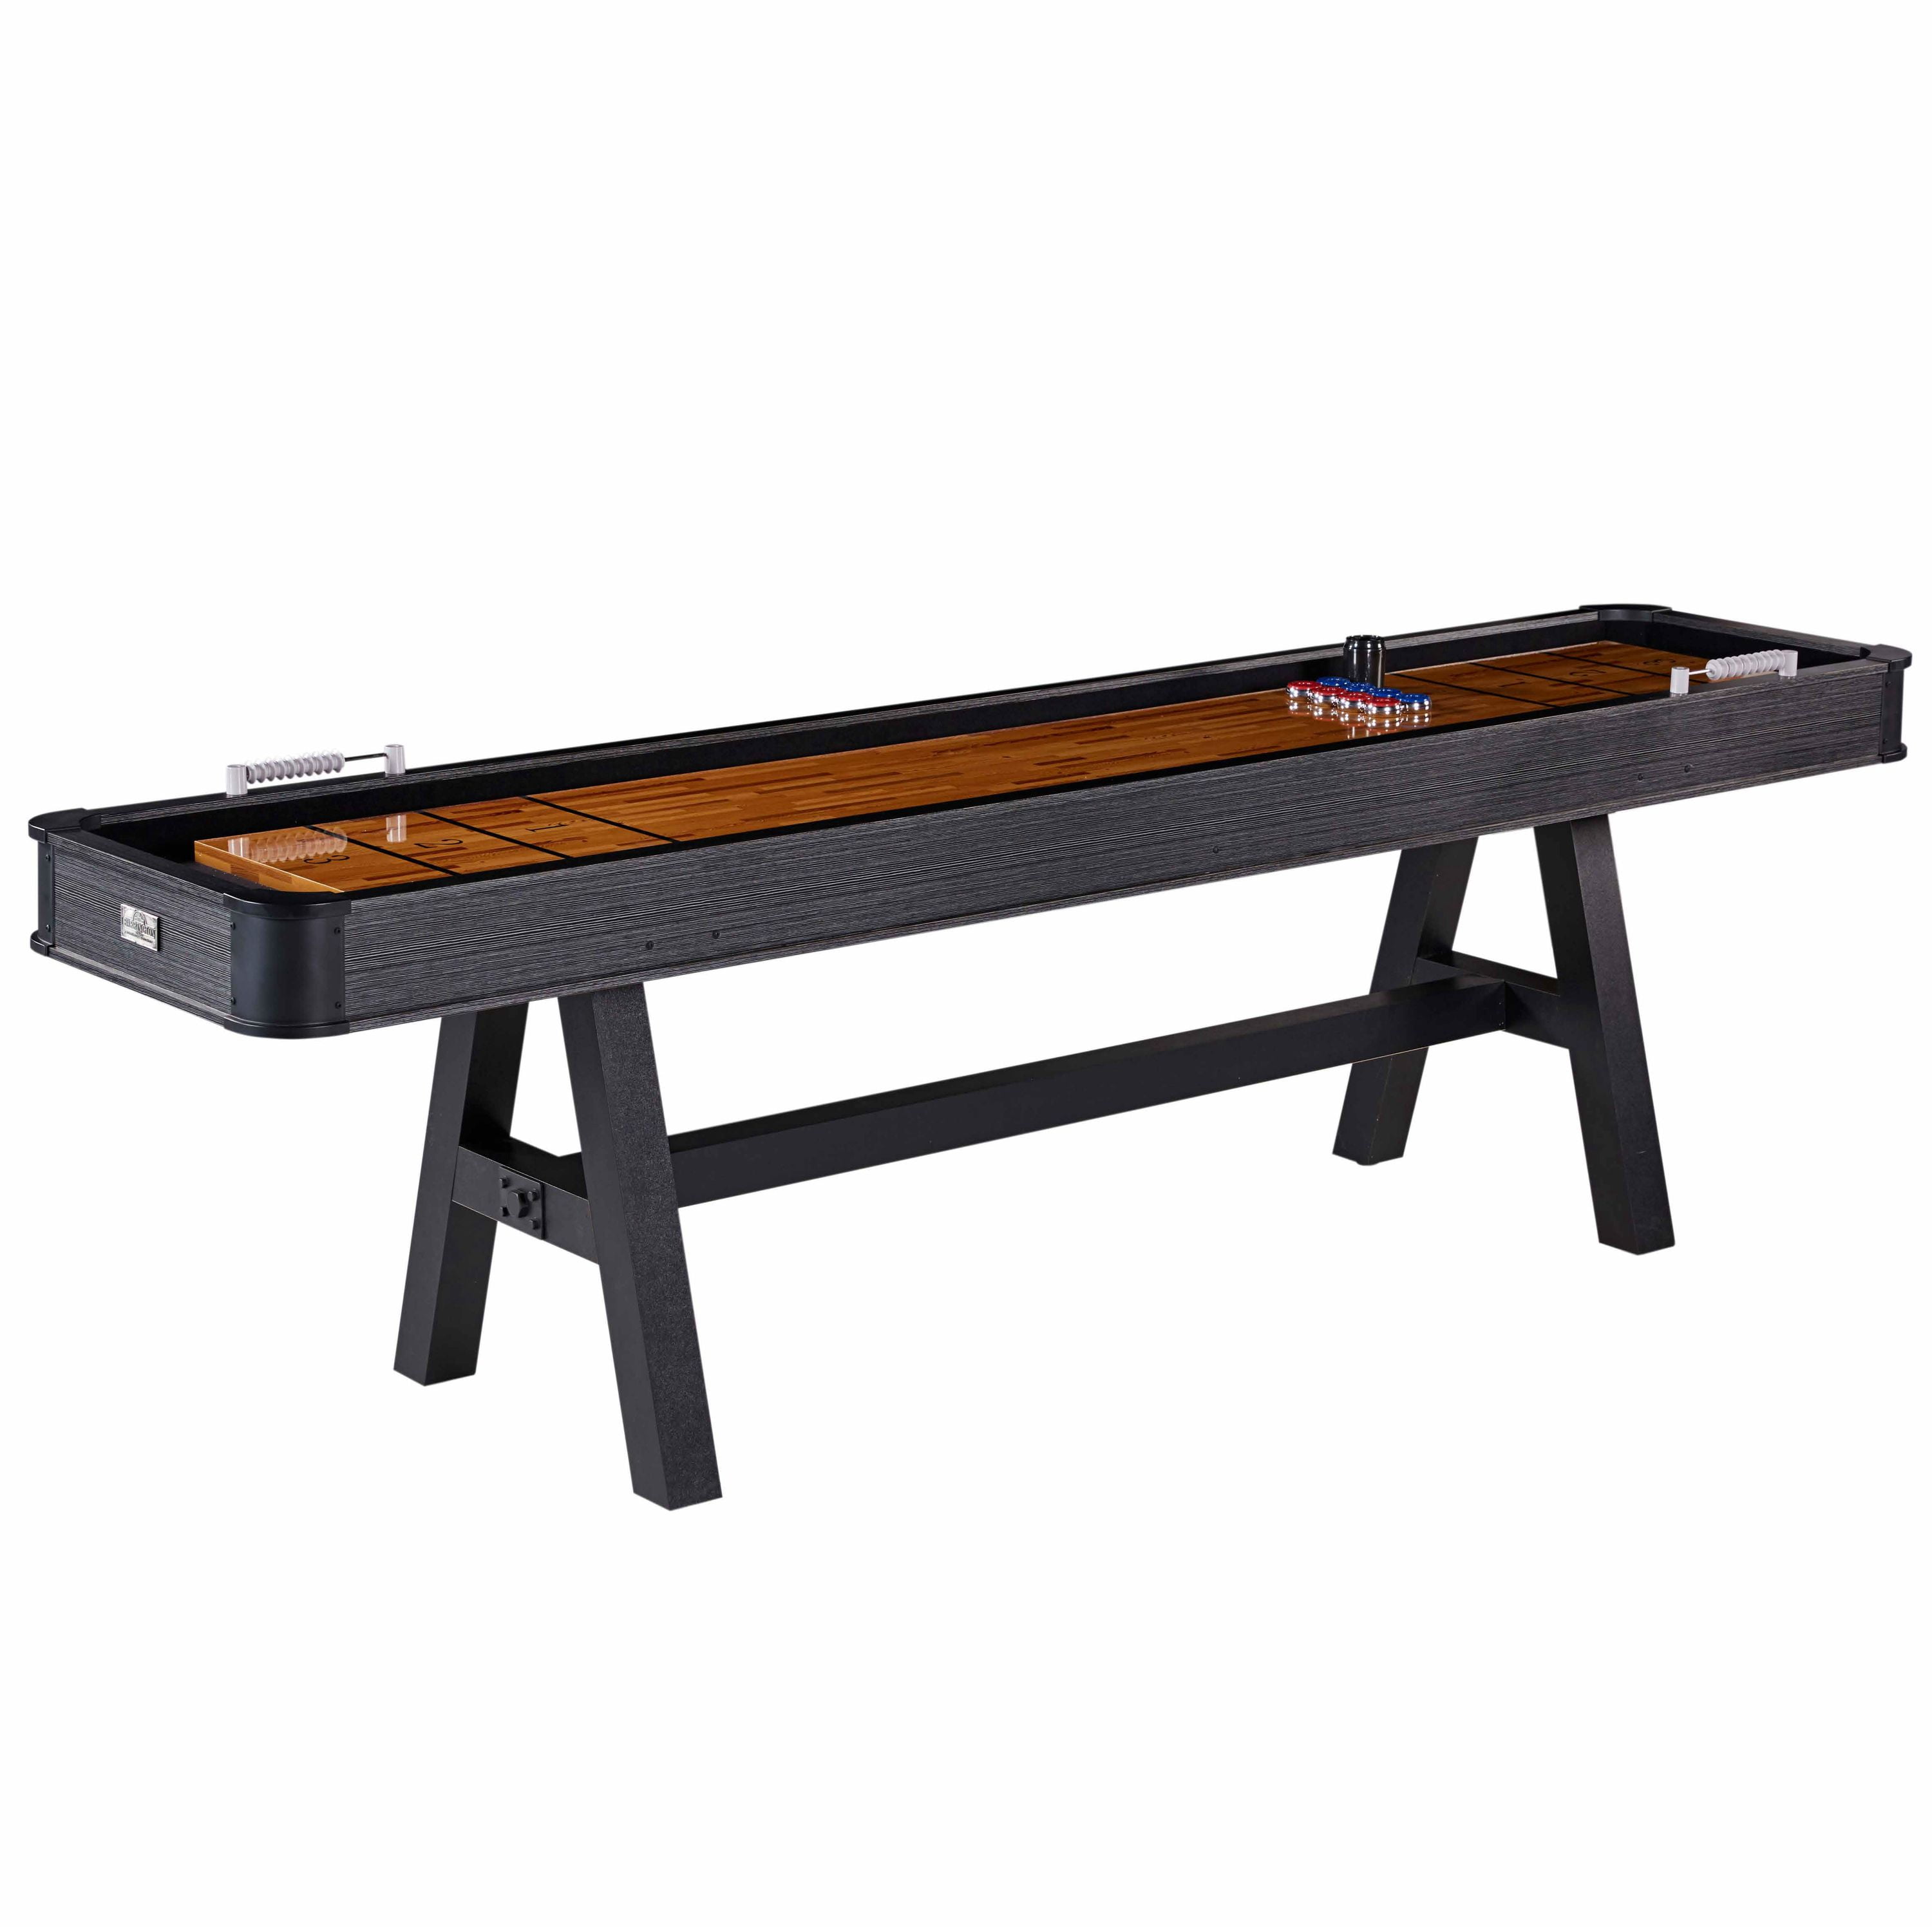 Barrington Billiards Belden 9 Foot Shuffleboard Table Brown for sale online 